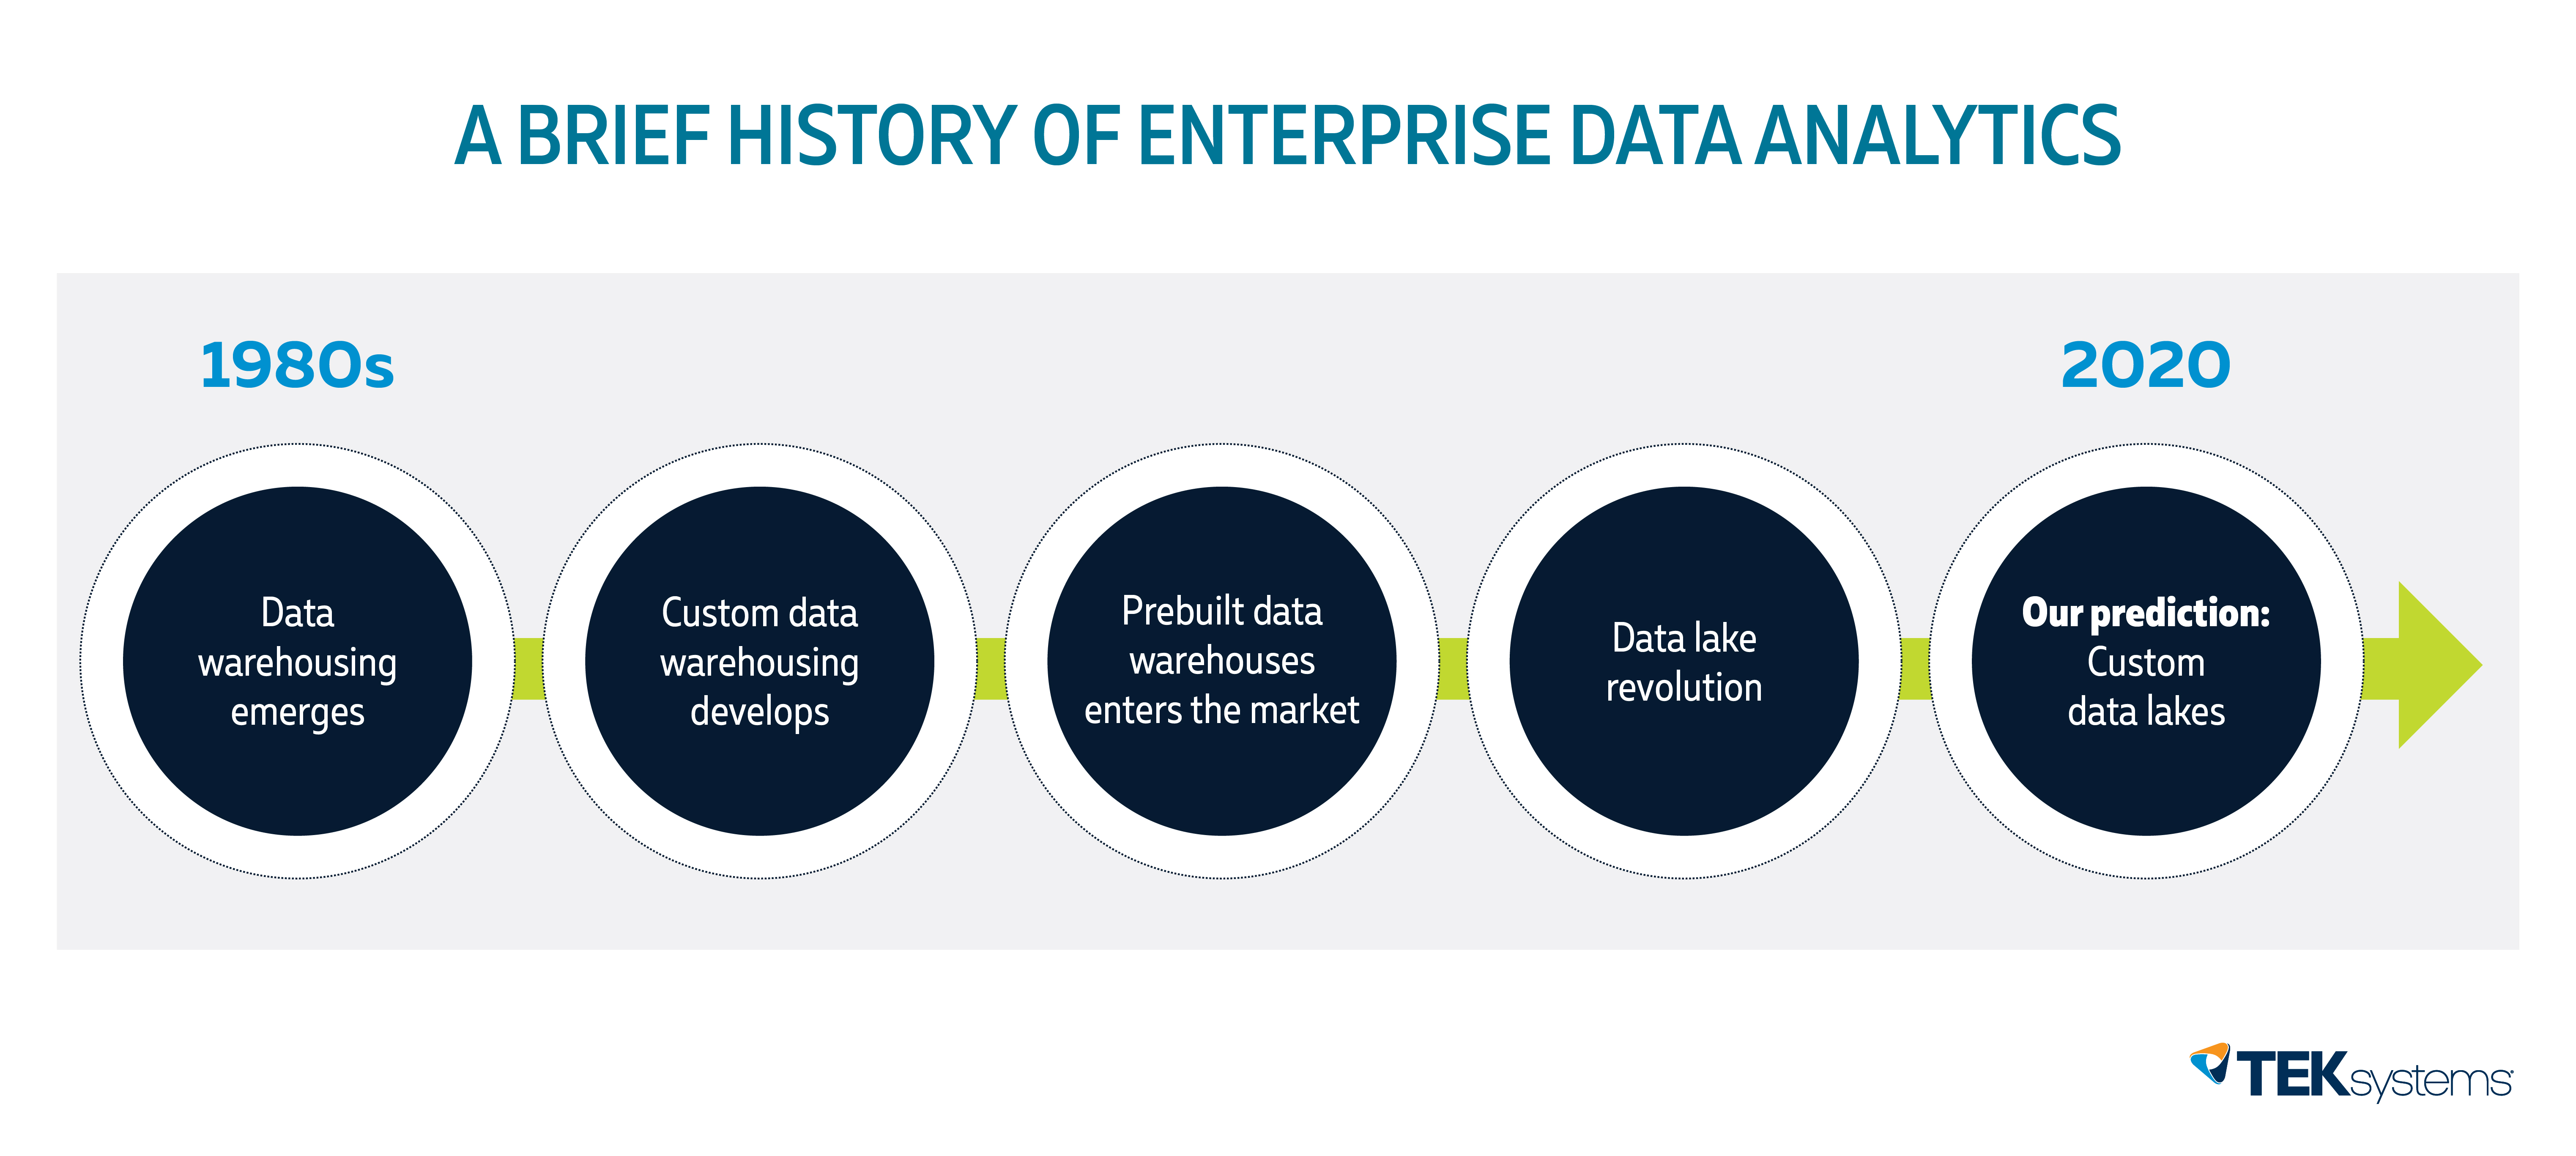 Enterprise data analytics timeline